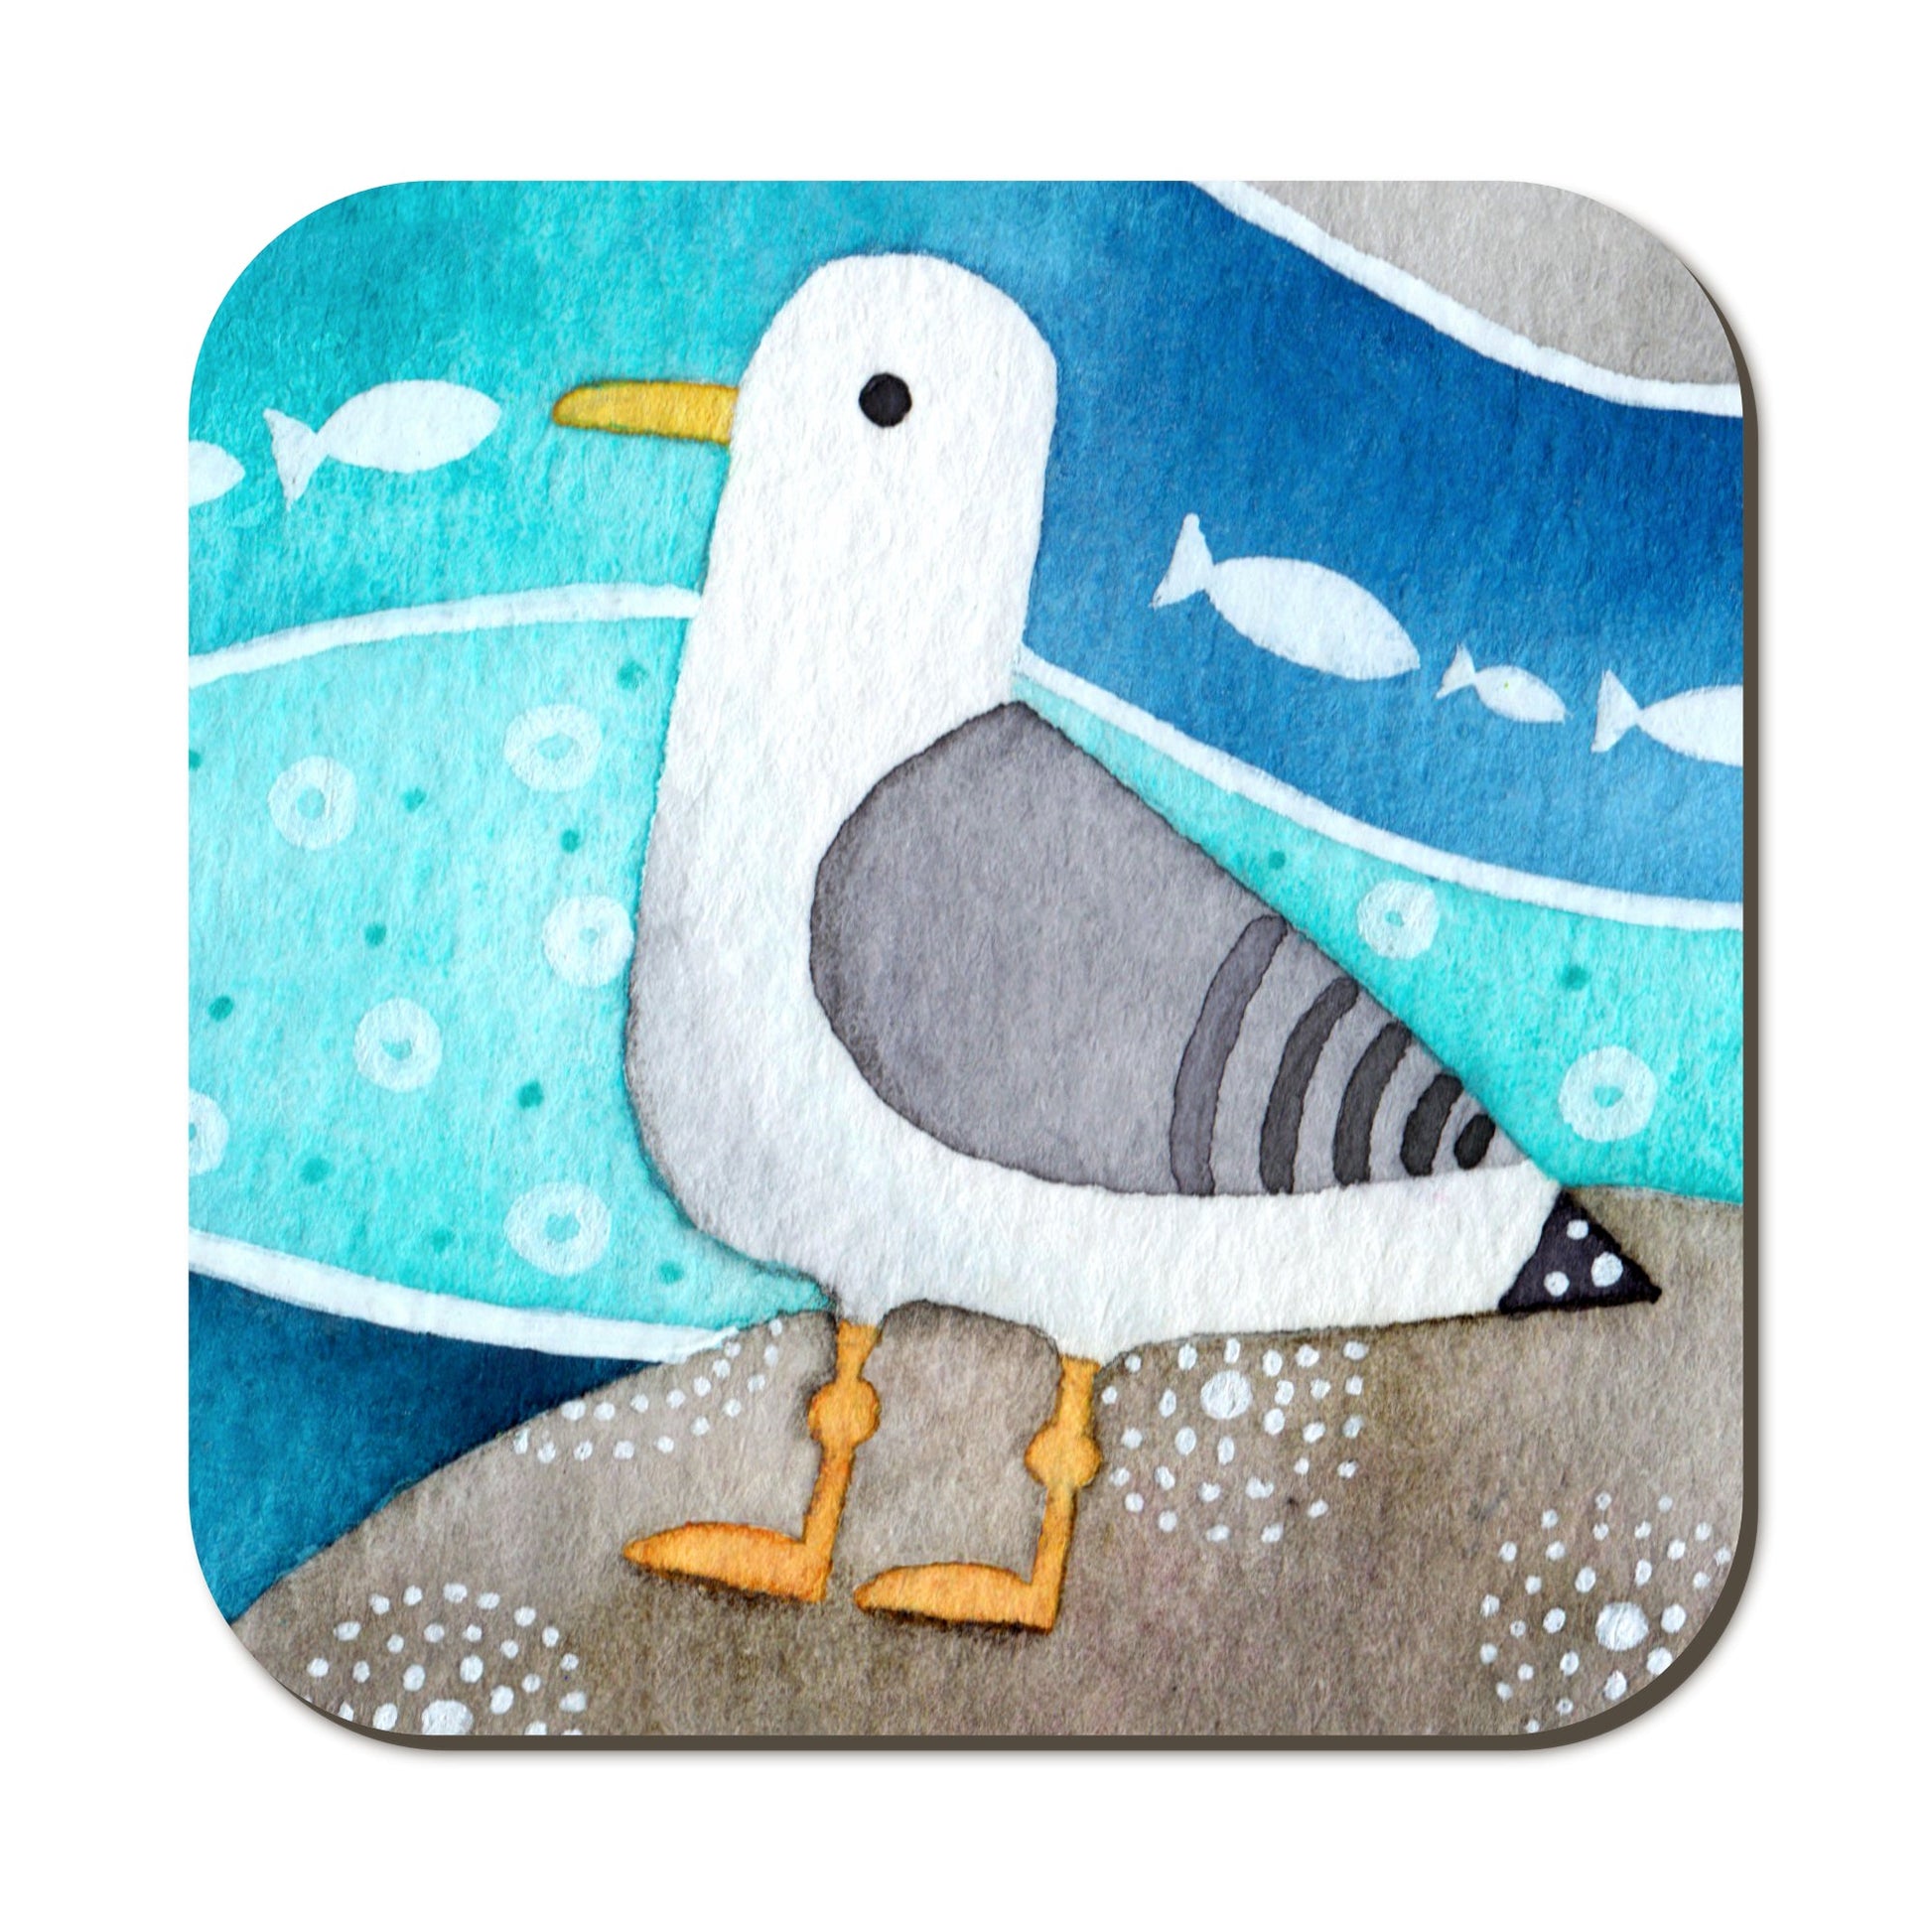 Coaster Set x 4 - Cute Seaside Animals - Puffin, Seagull, Crab, Oystercatcher - East Neuk Beach Crafts